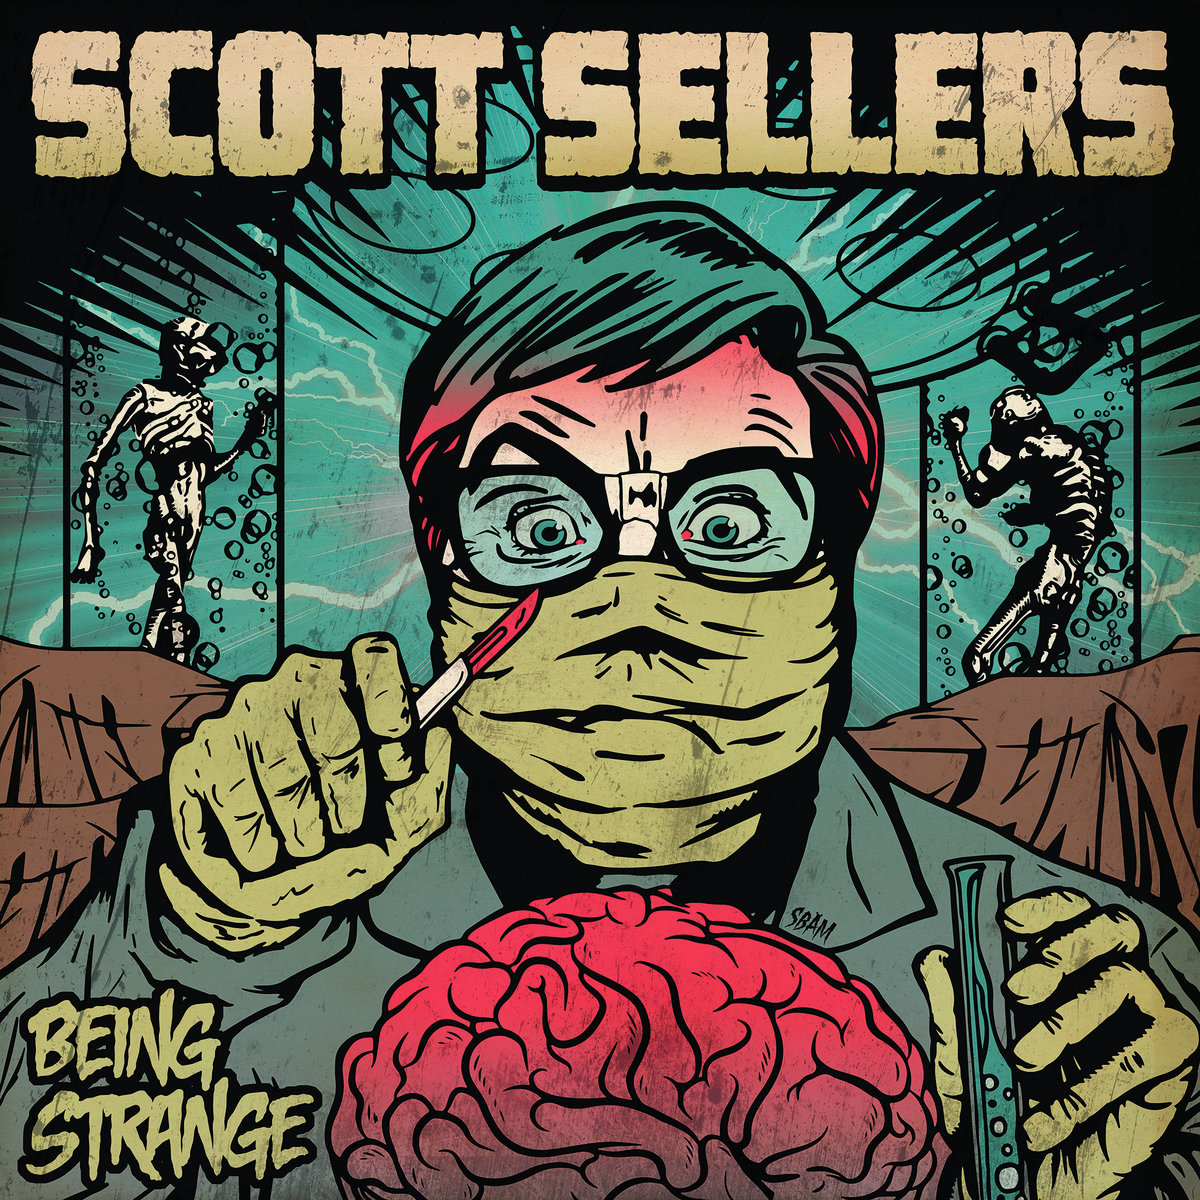 Scott Sellers - Being Strange (2019)